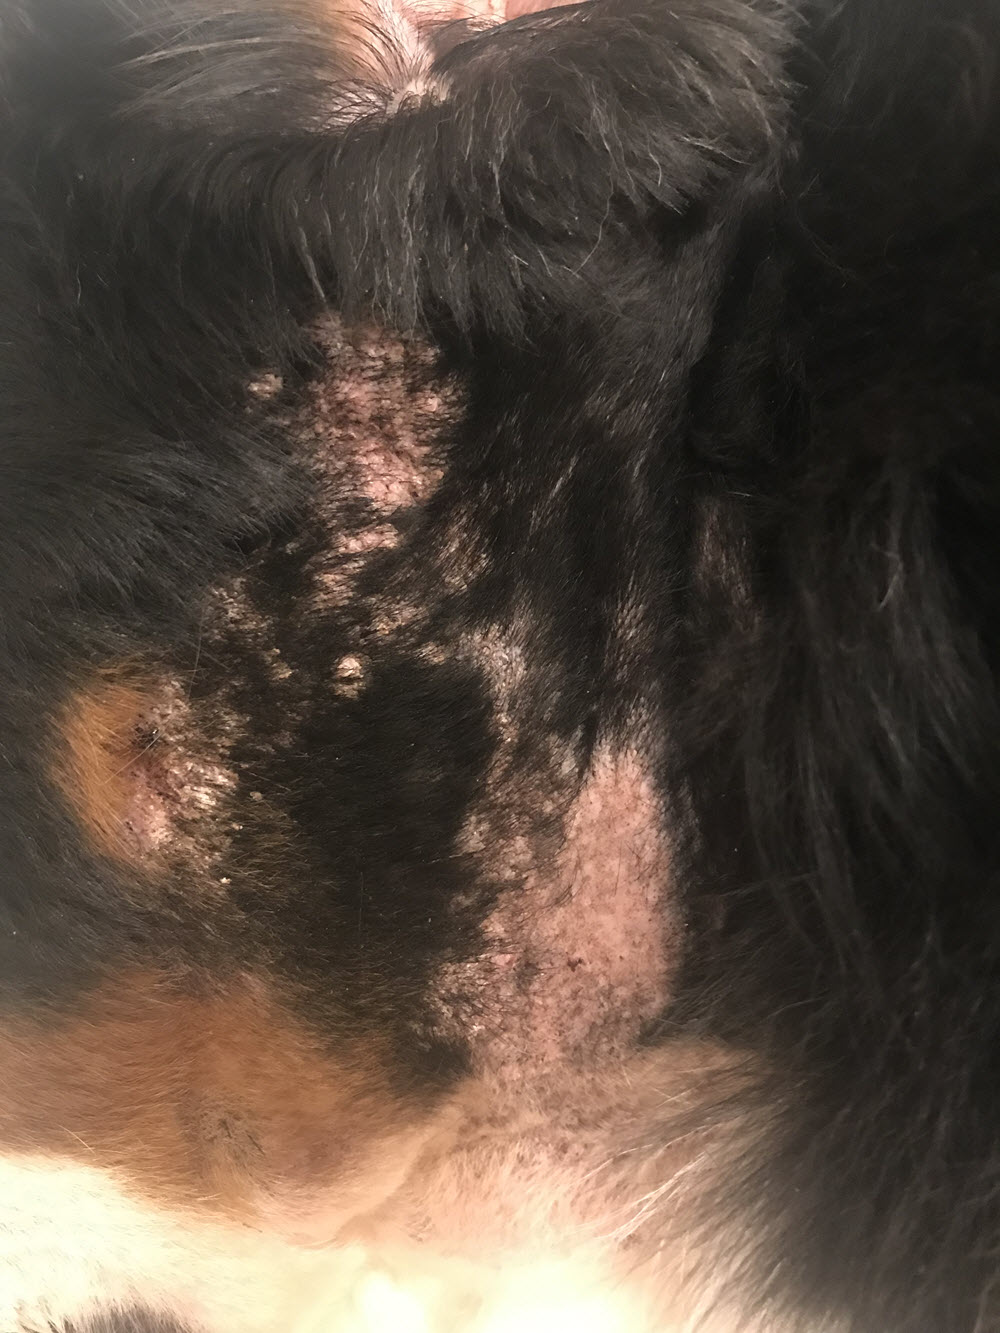 Blue Cured of Pyotraumatic Dermatits on January 9, 2019